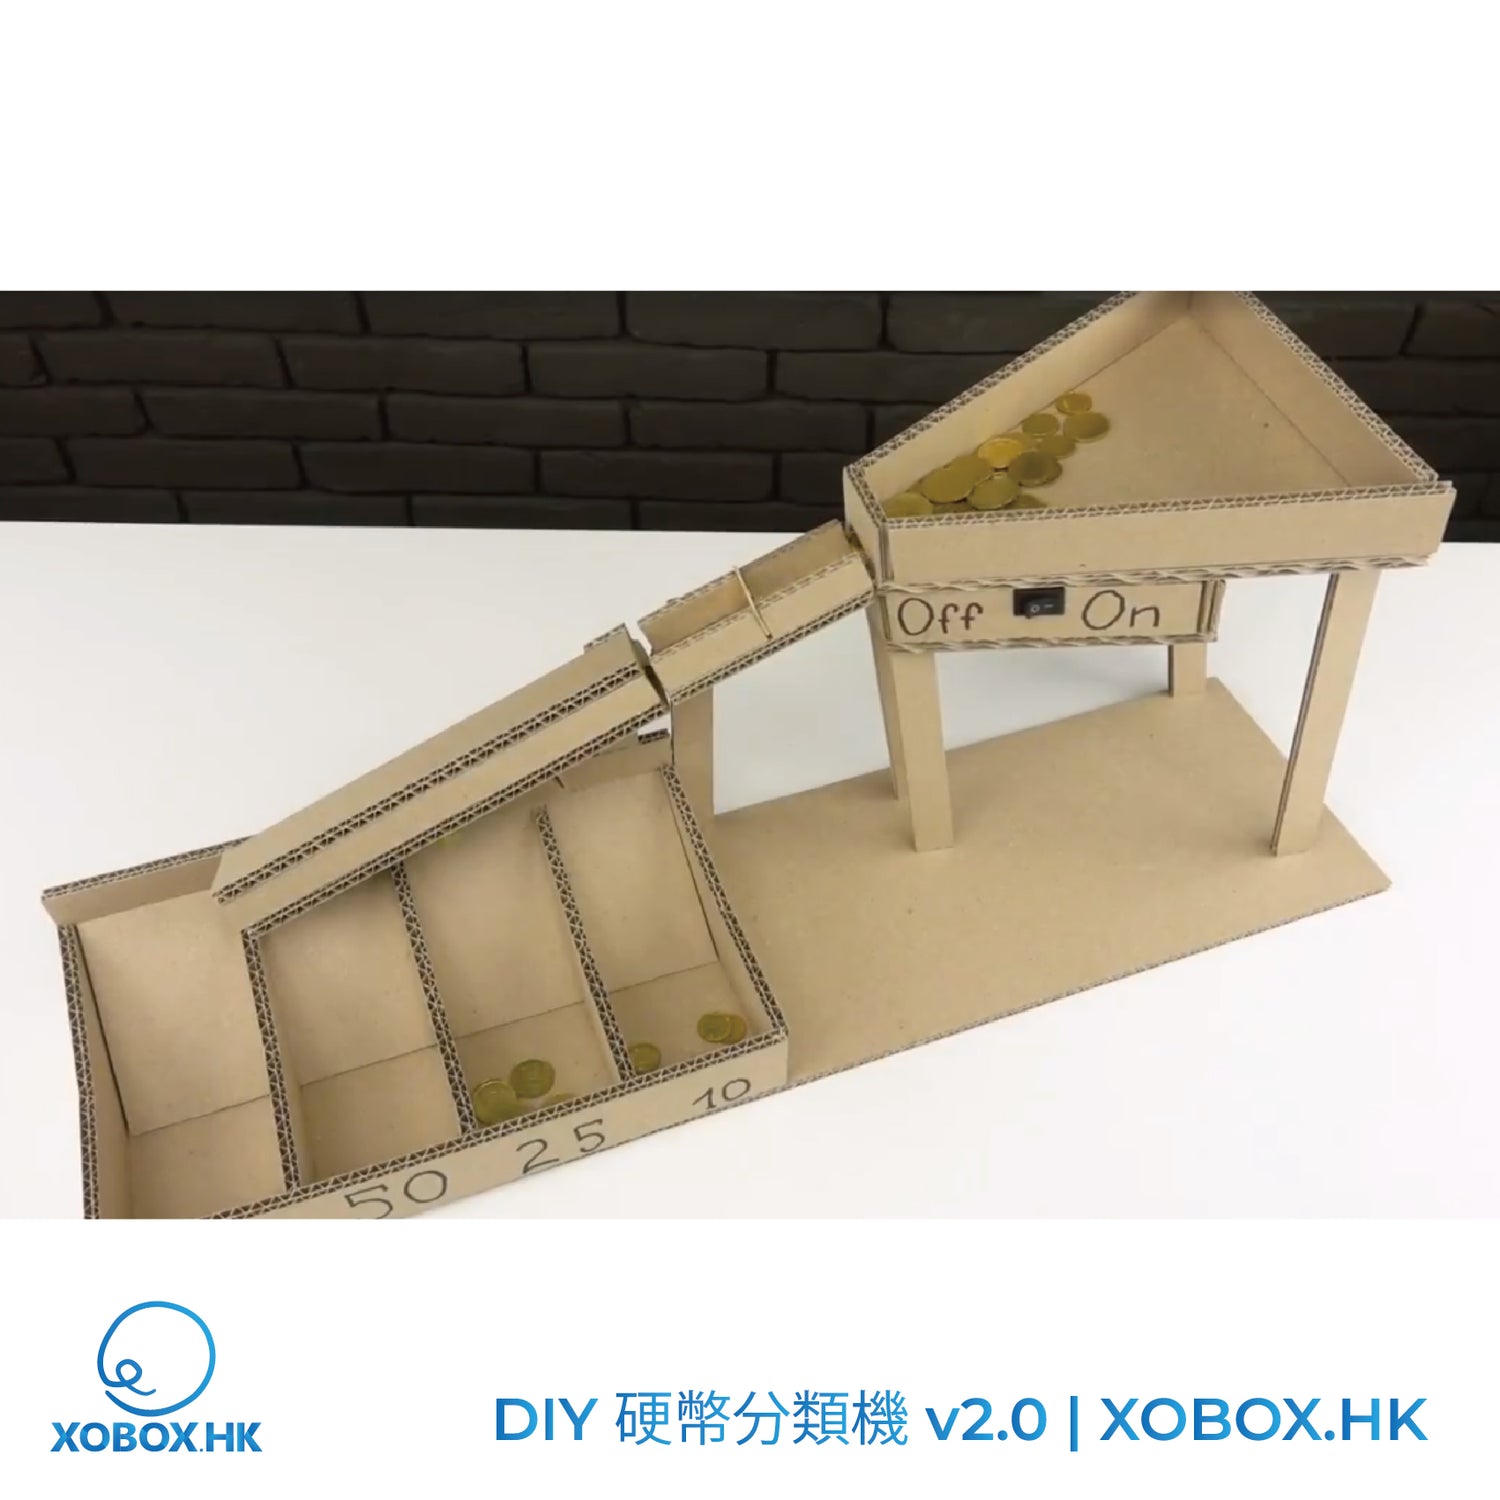 DIY 硬幣分類機 v2.0 | XOBOX.HK